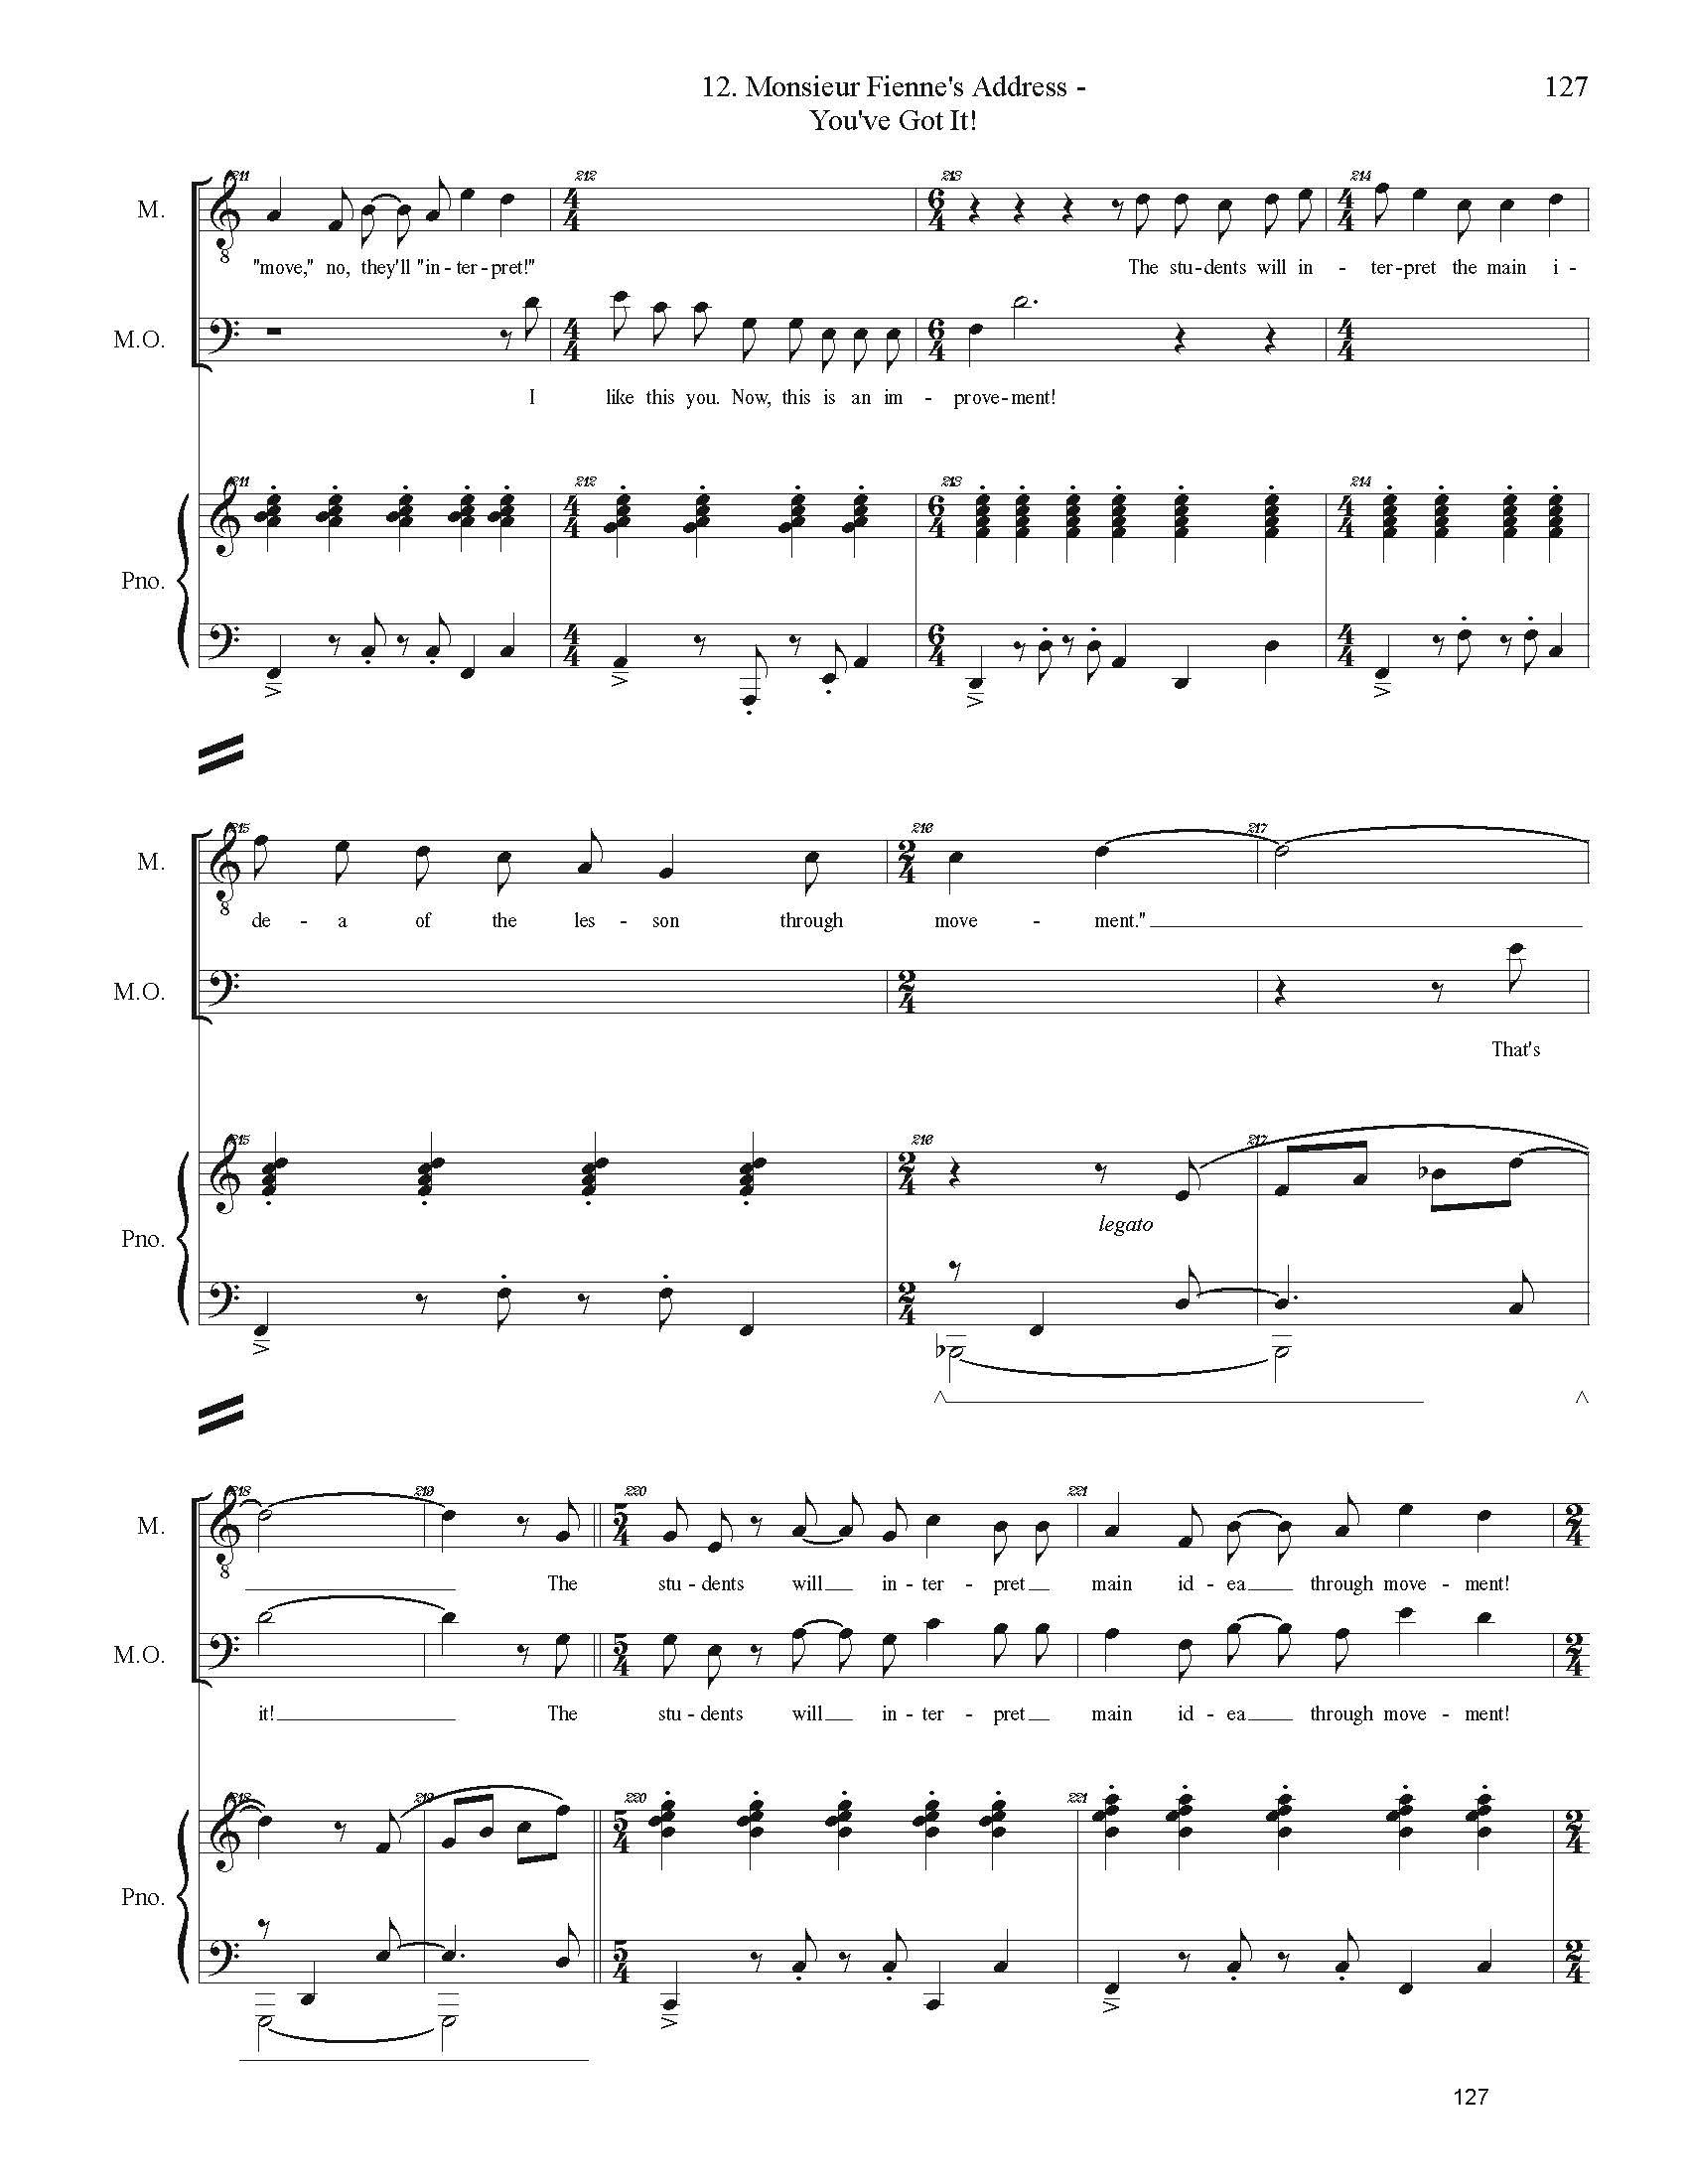 FULL PIANO VOCAL SCORE DRAFT 1 - Score_Page_127.jpg